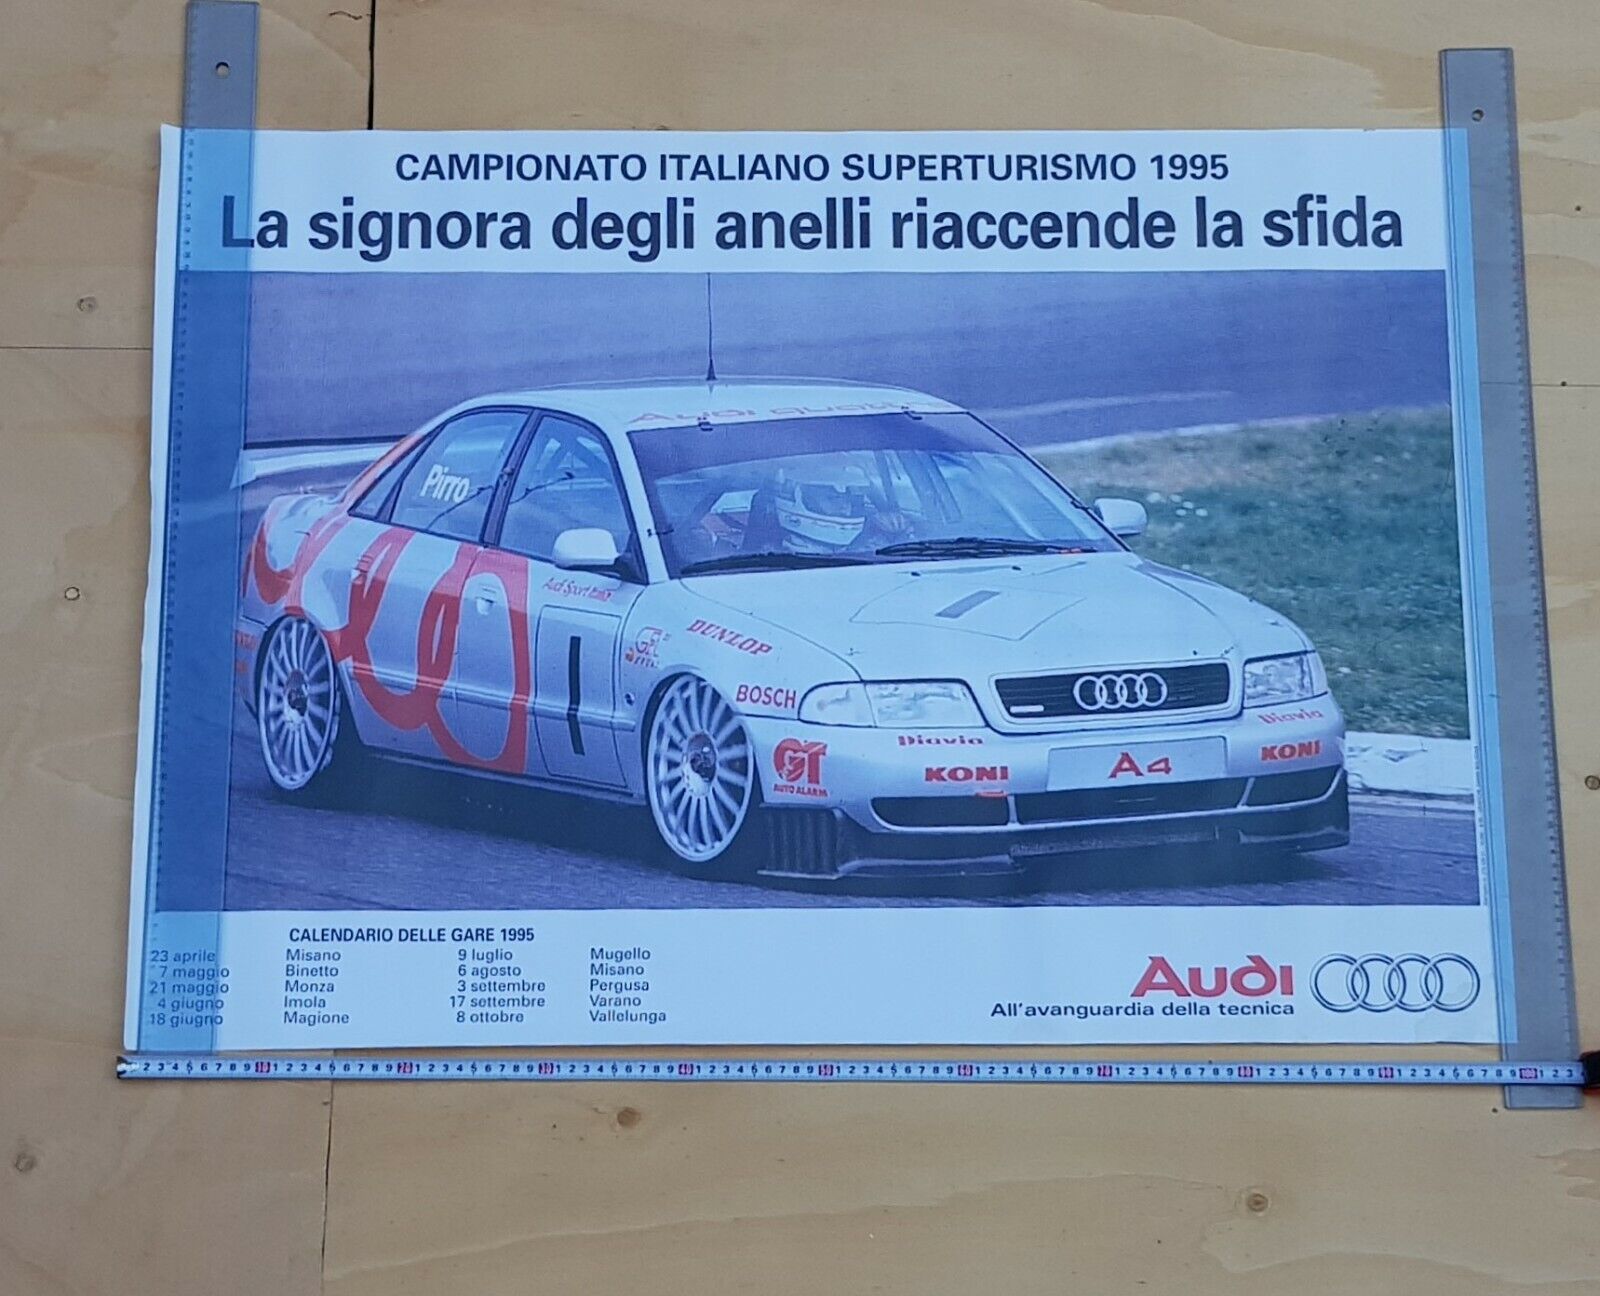 Audi Campionato Italiano Superturismo 1995 manifesto poster originale 